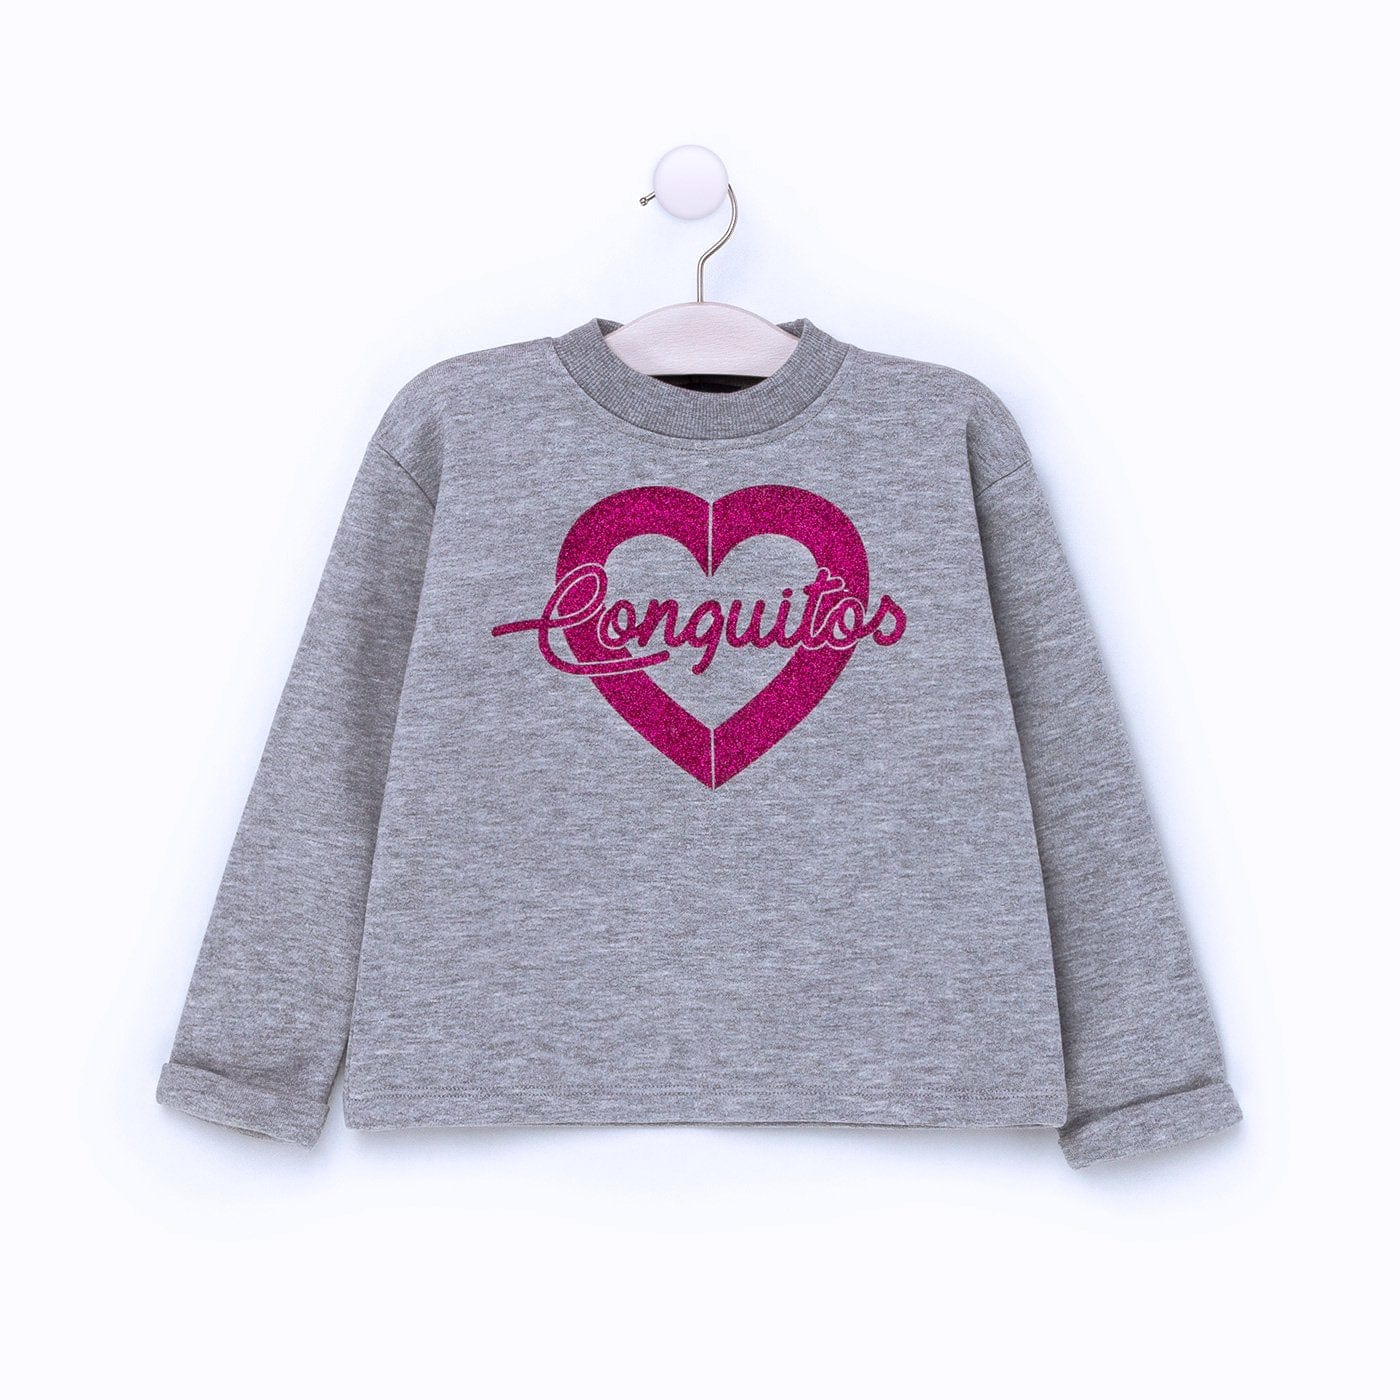 CONGUITOS TEXTIL Clothing Girl's Grey Heart Glitter Sweatshirt